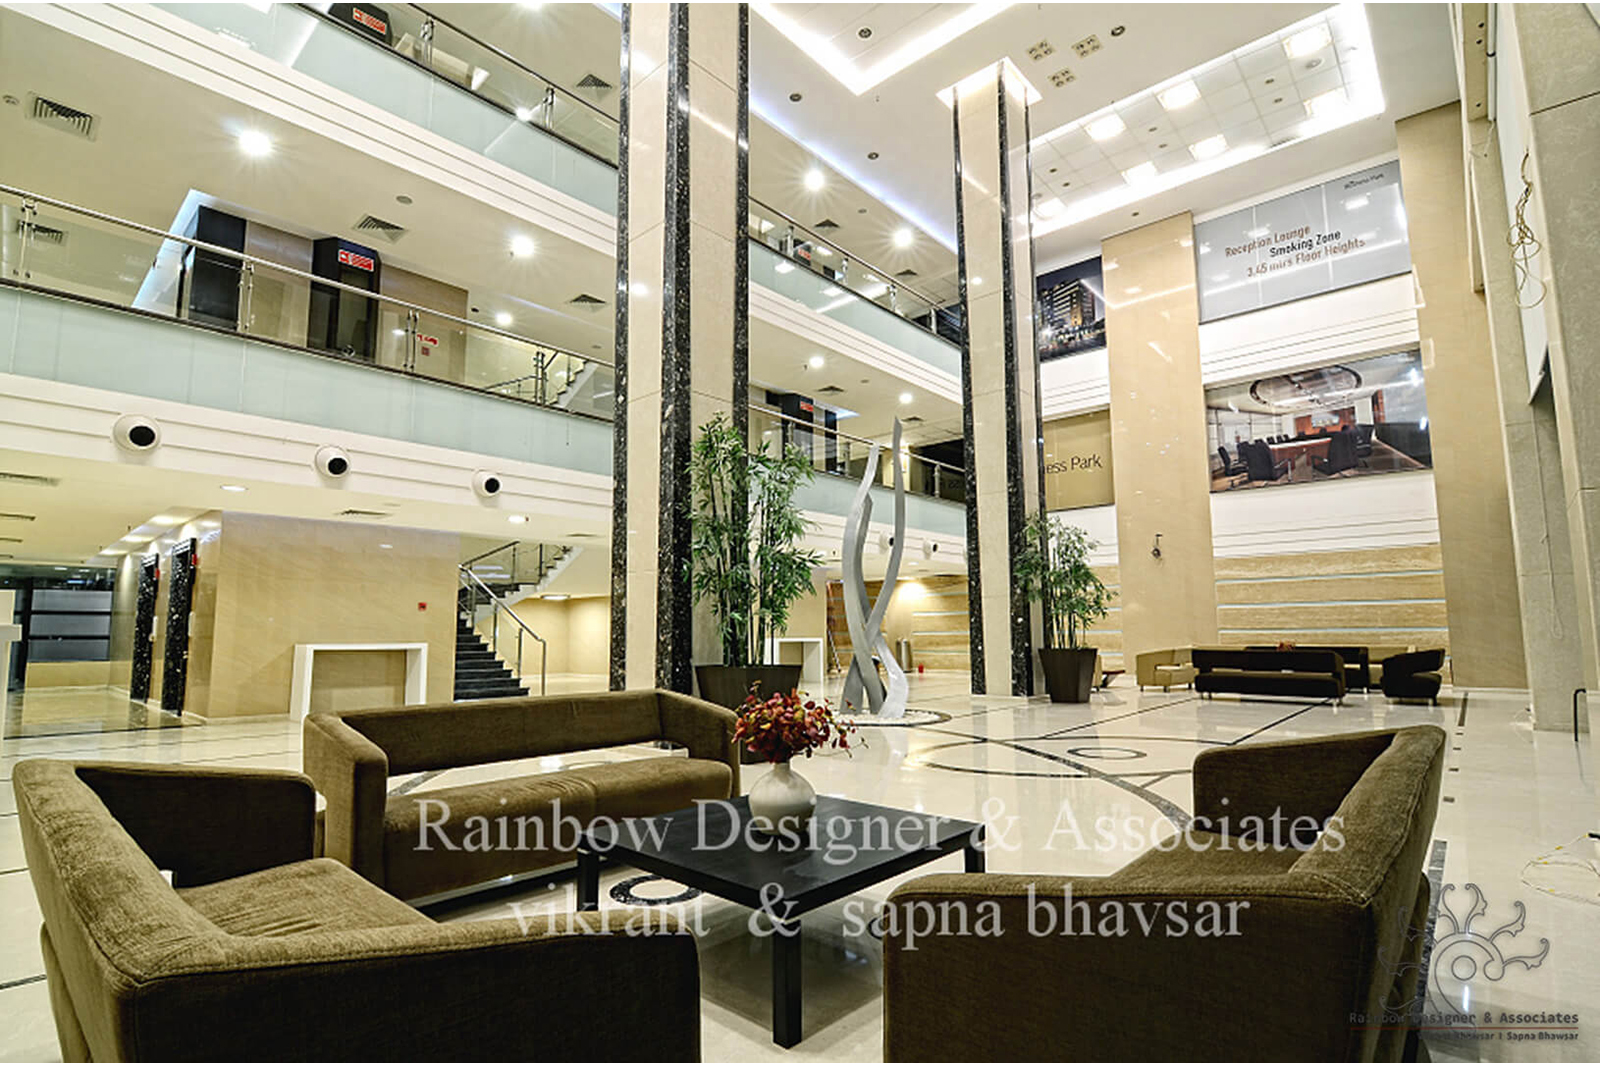 Rainbow Designers & Associates Indore